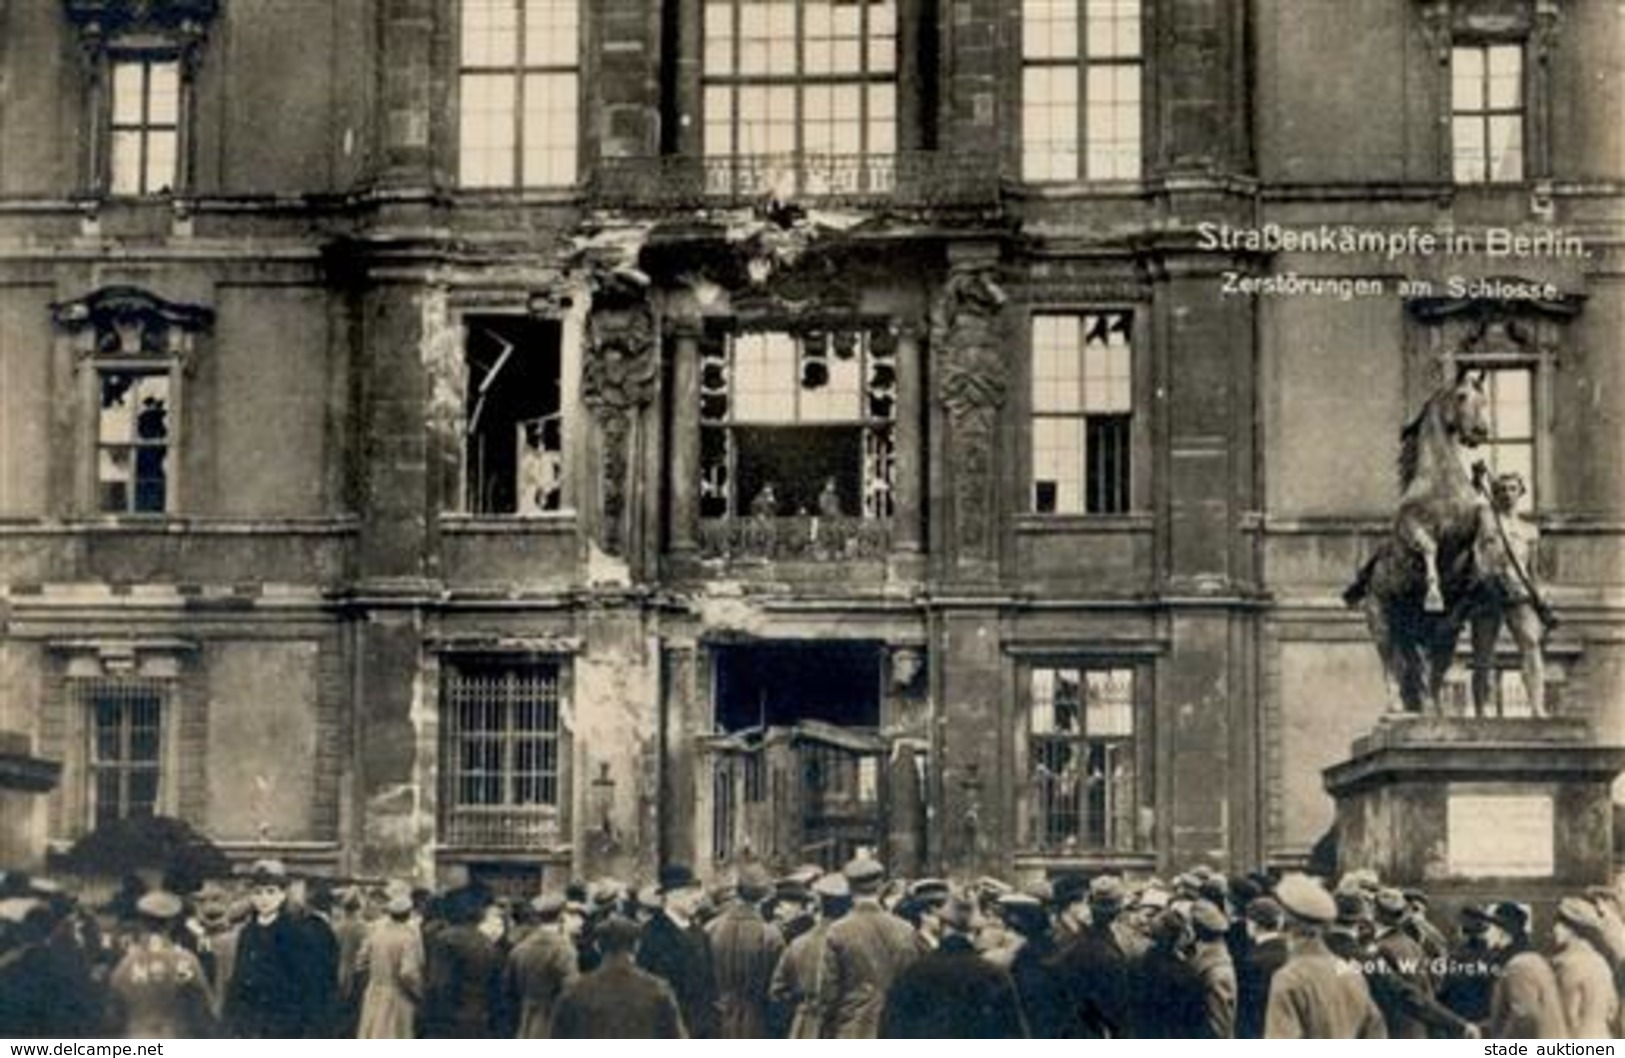 REVOLUTION BERLIN 1919 - STRASSENKÄMPFE In Berlin No. 5 - Zerstörungen Am Schloss I - Krieg